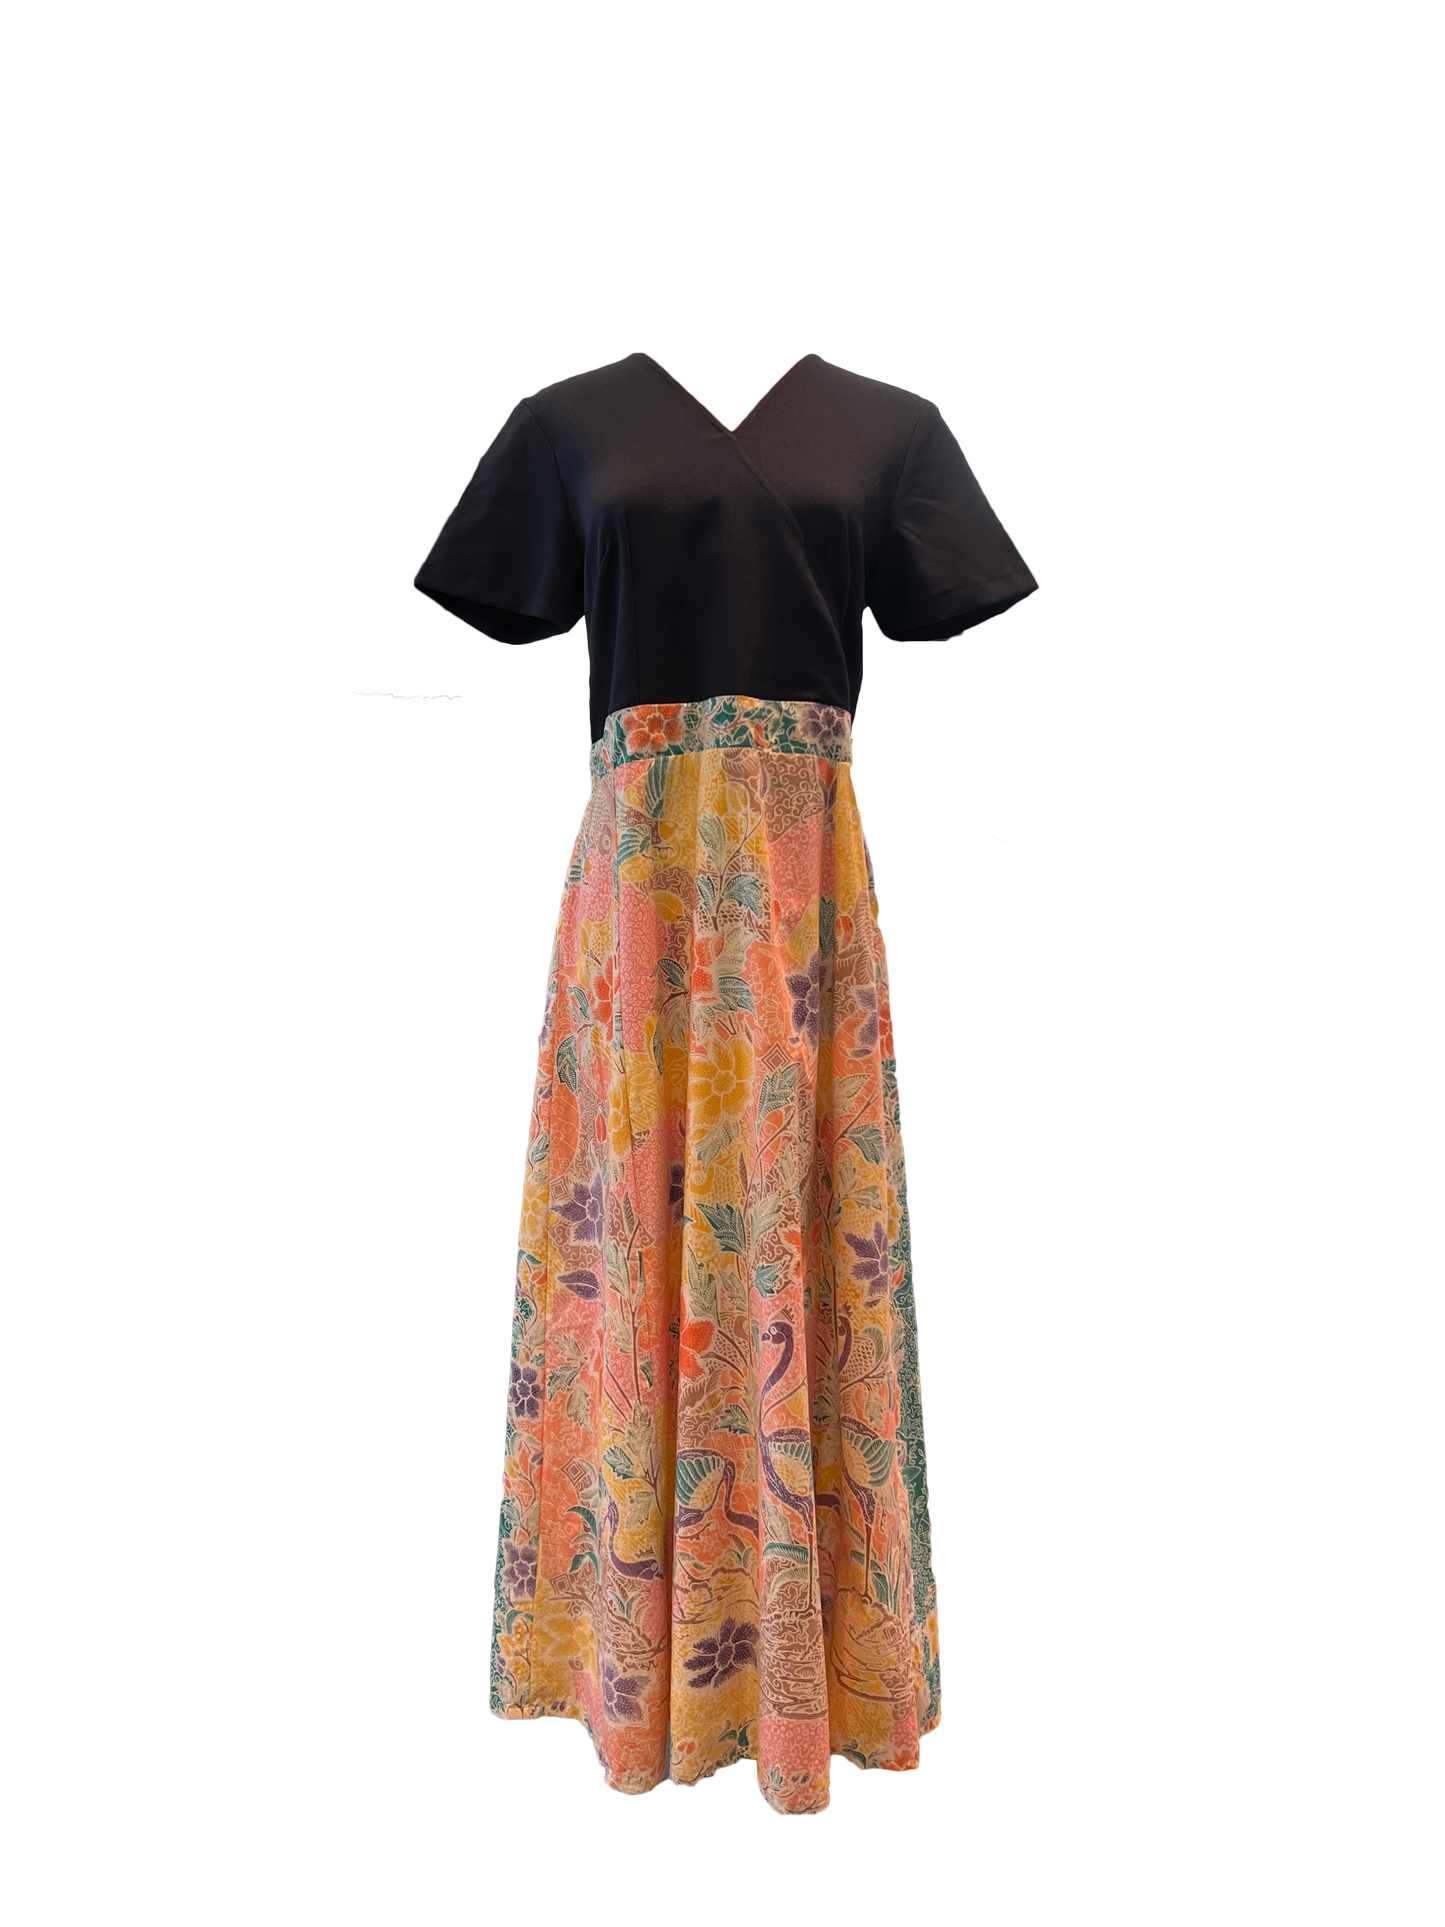 Colour Block Batik dress